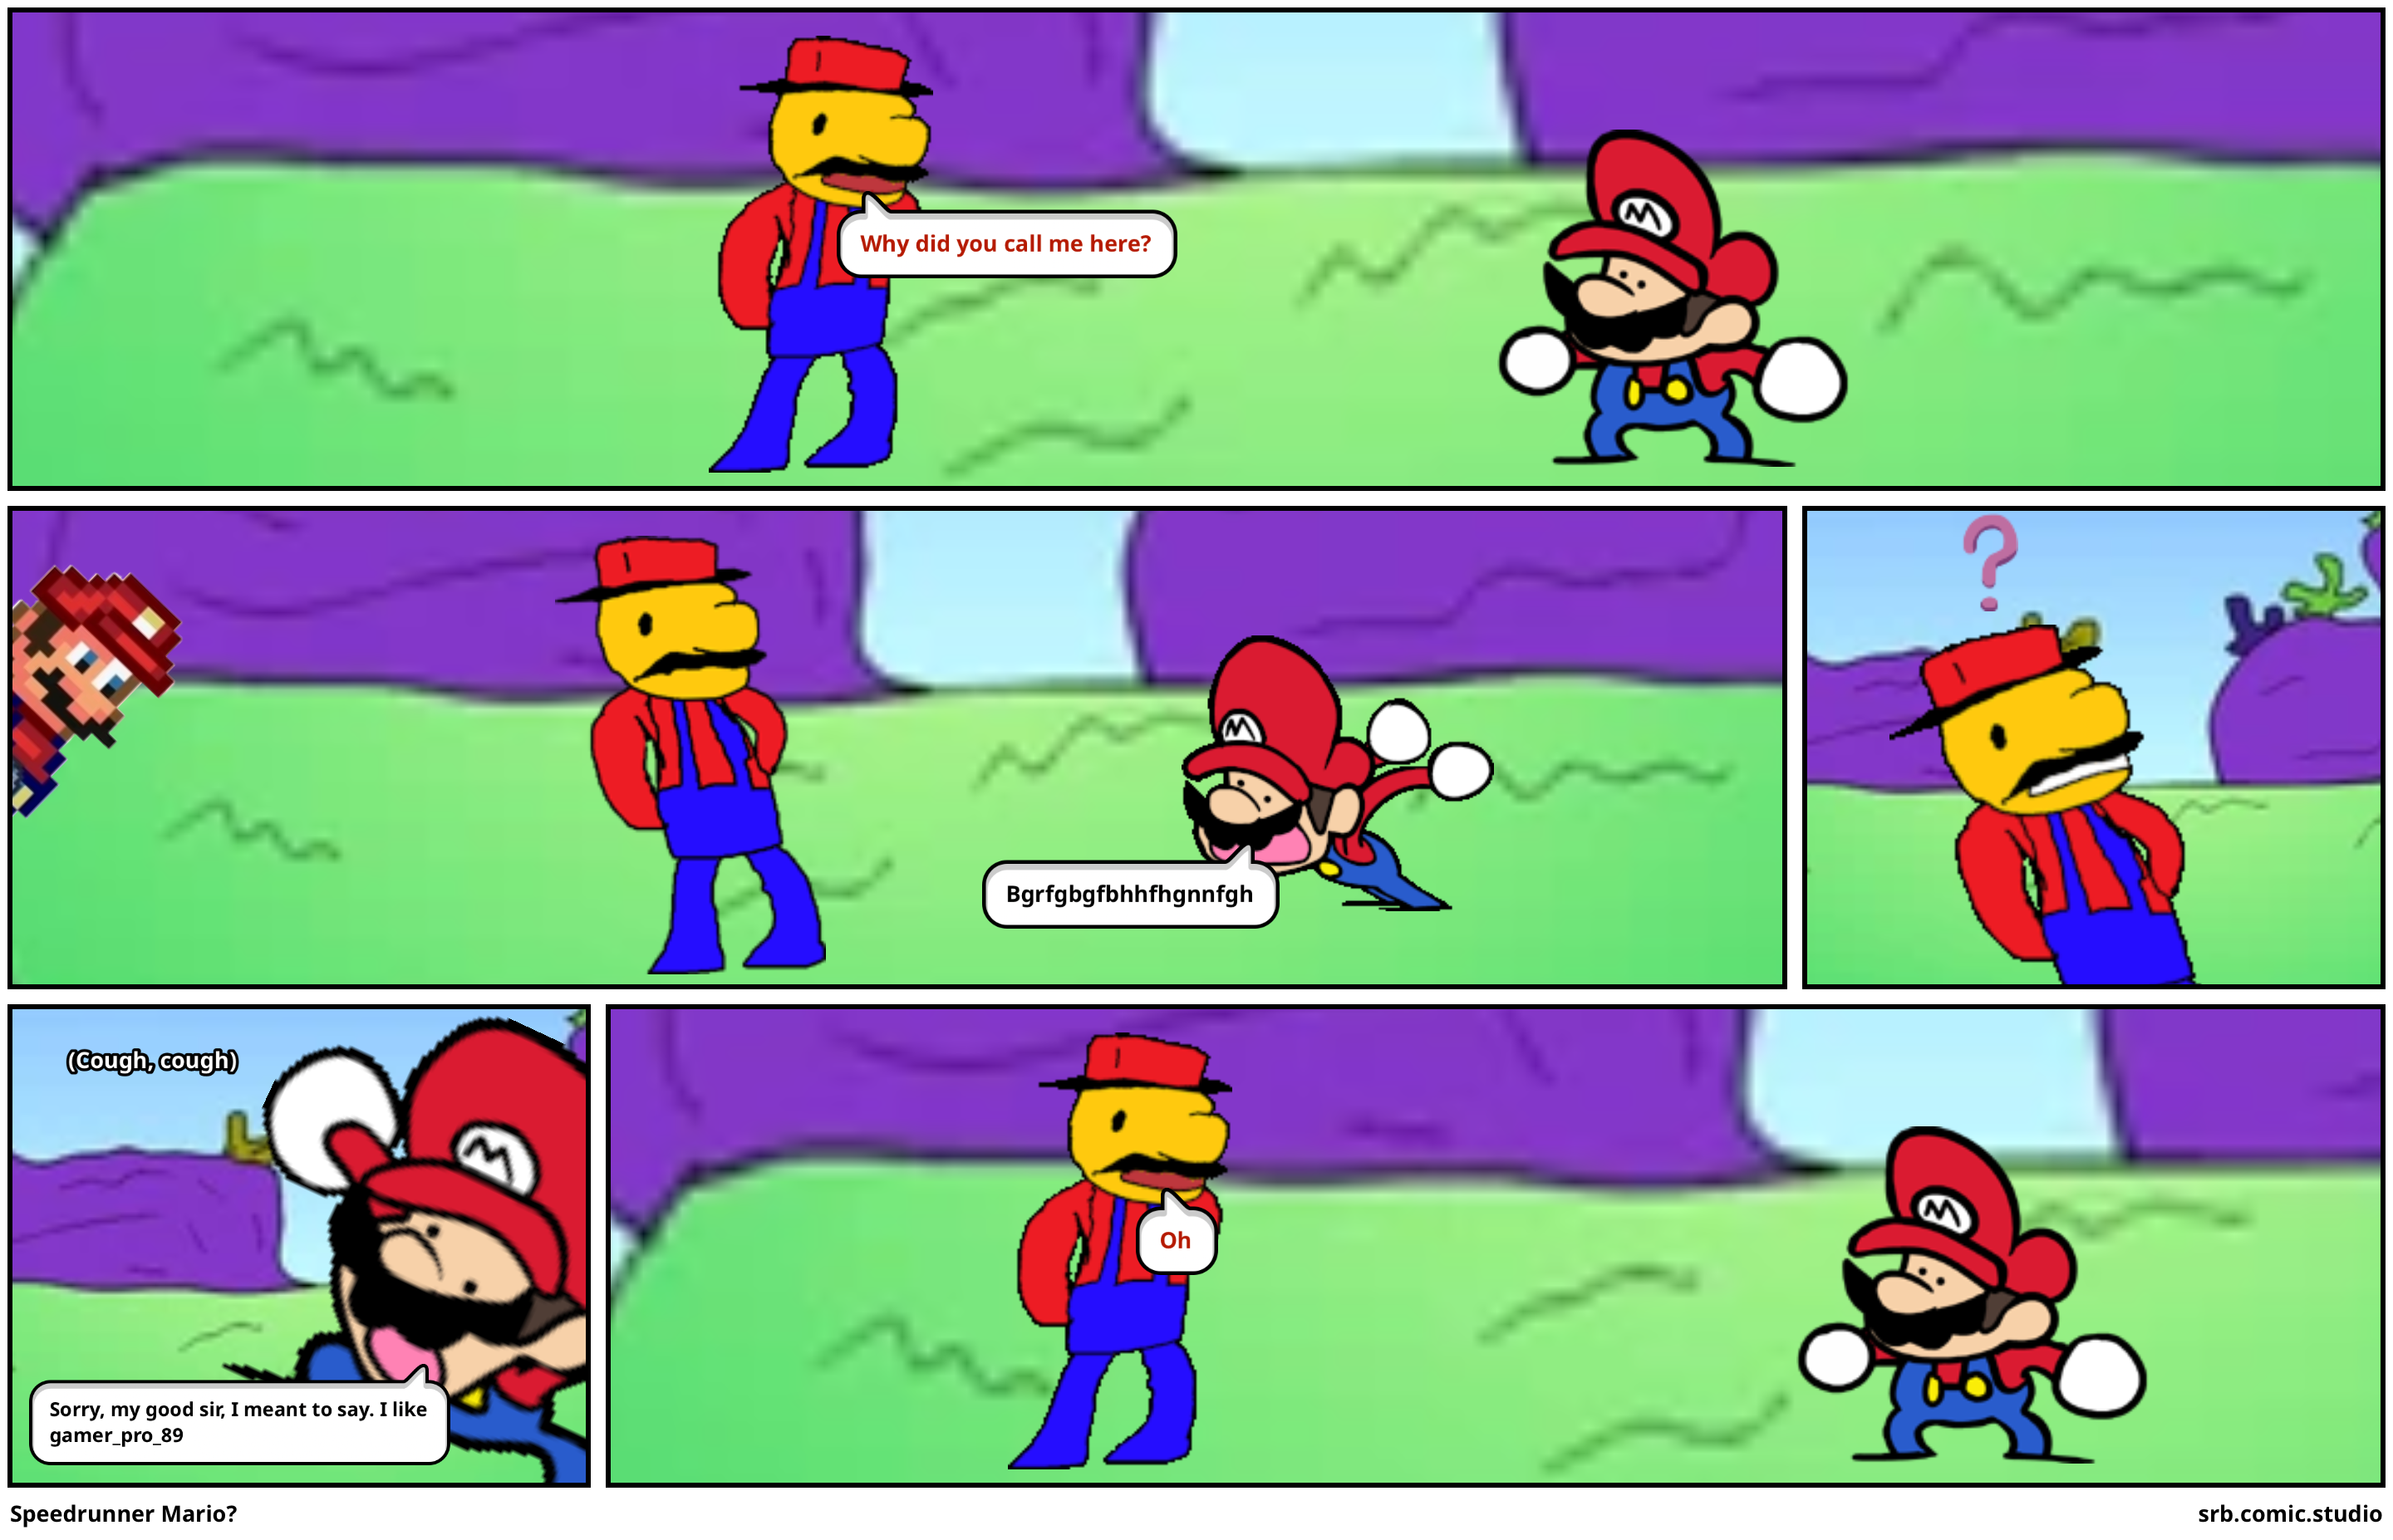 Speedrunner Mario?